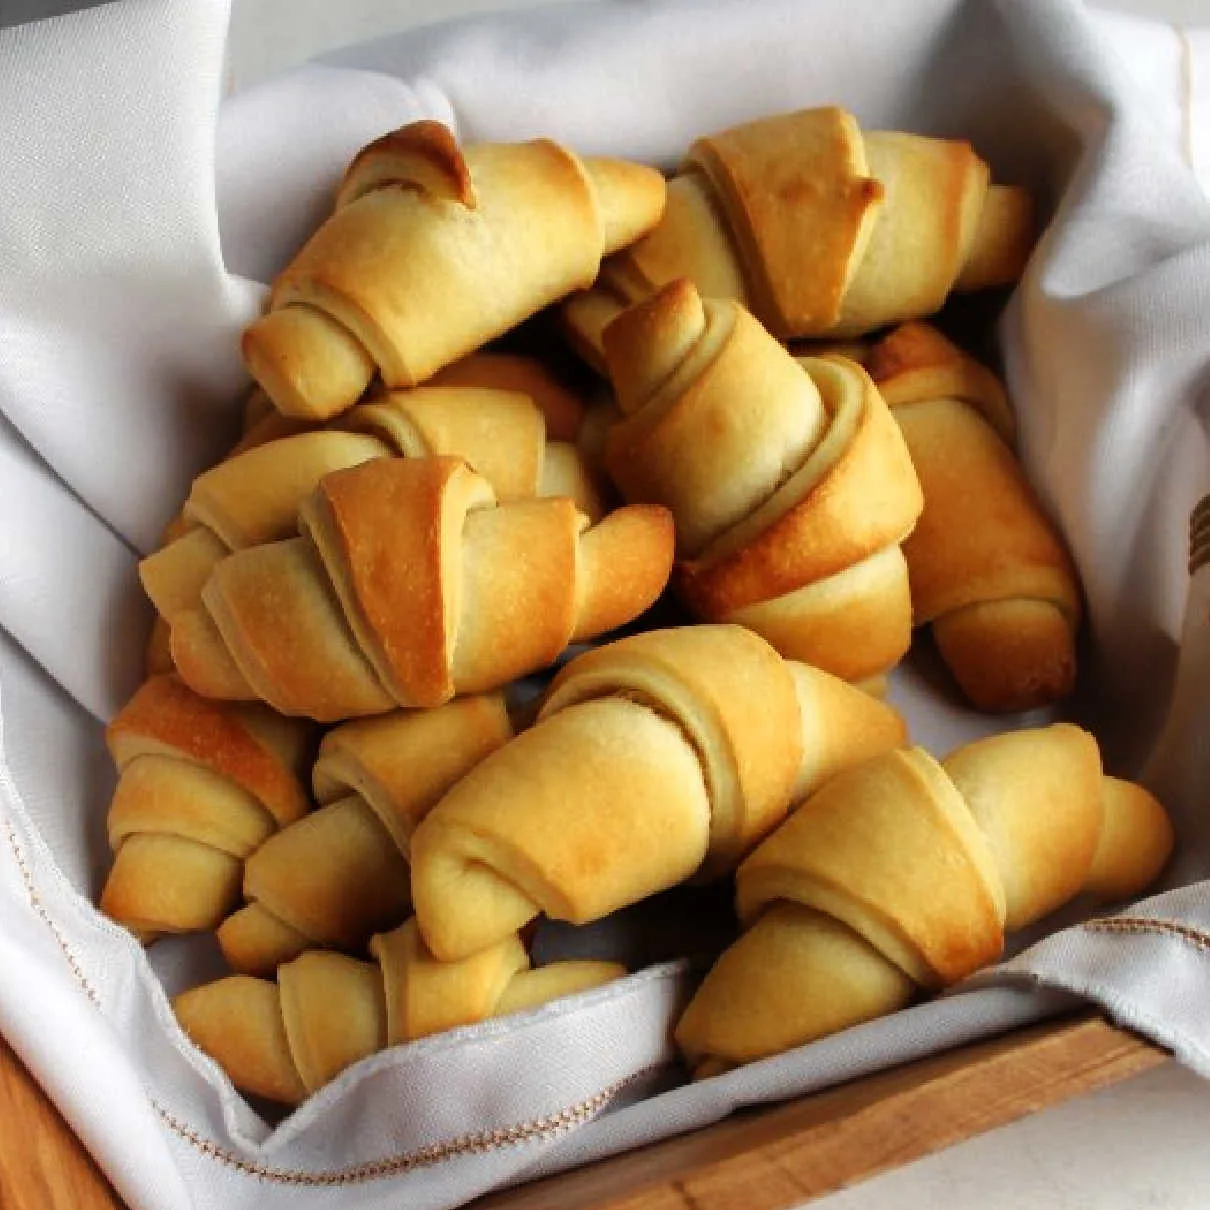 Close up of freshly baked golden brown crescent rolls.